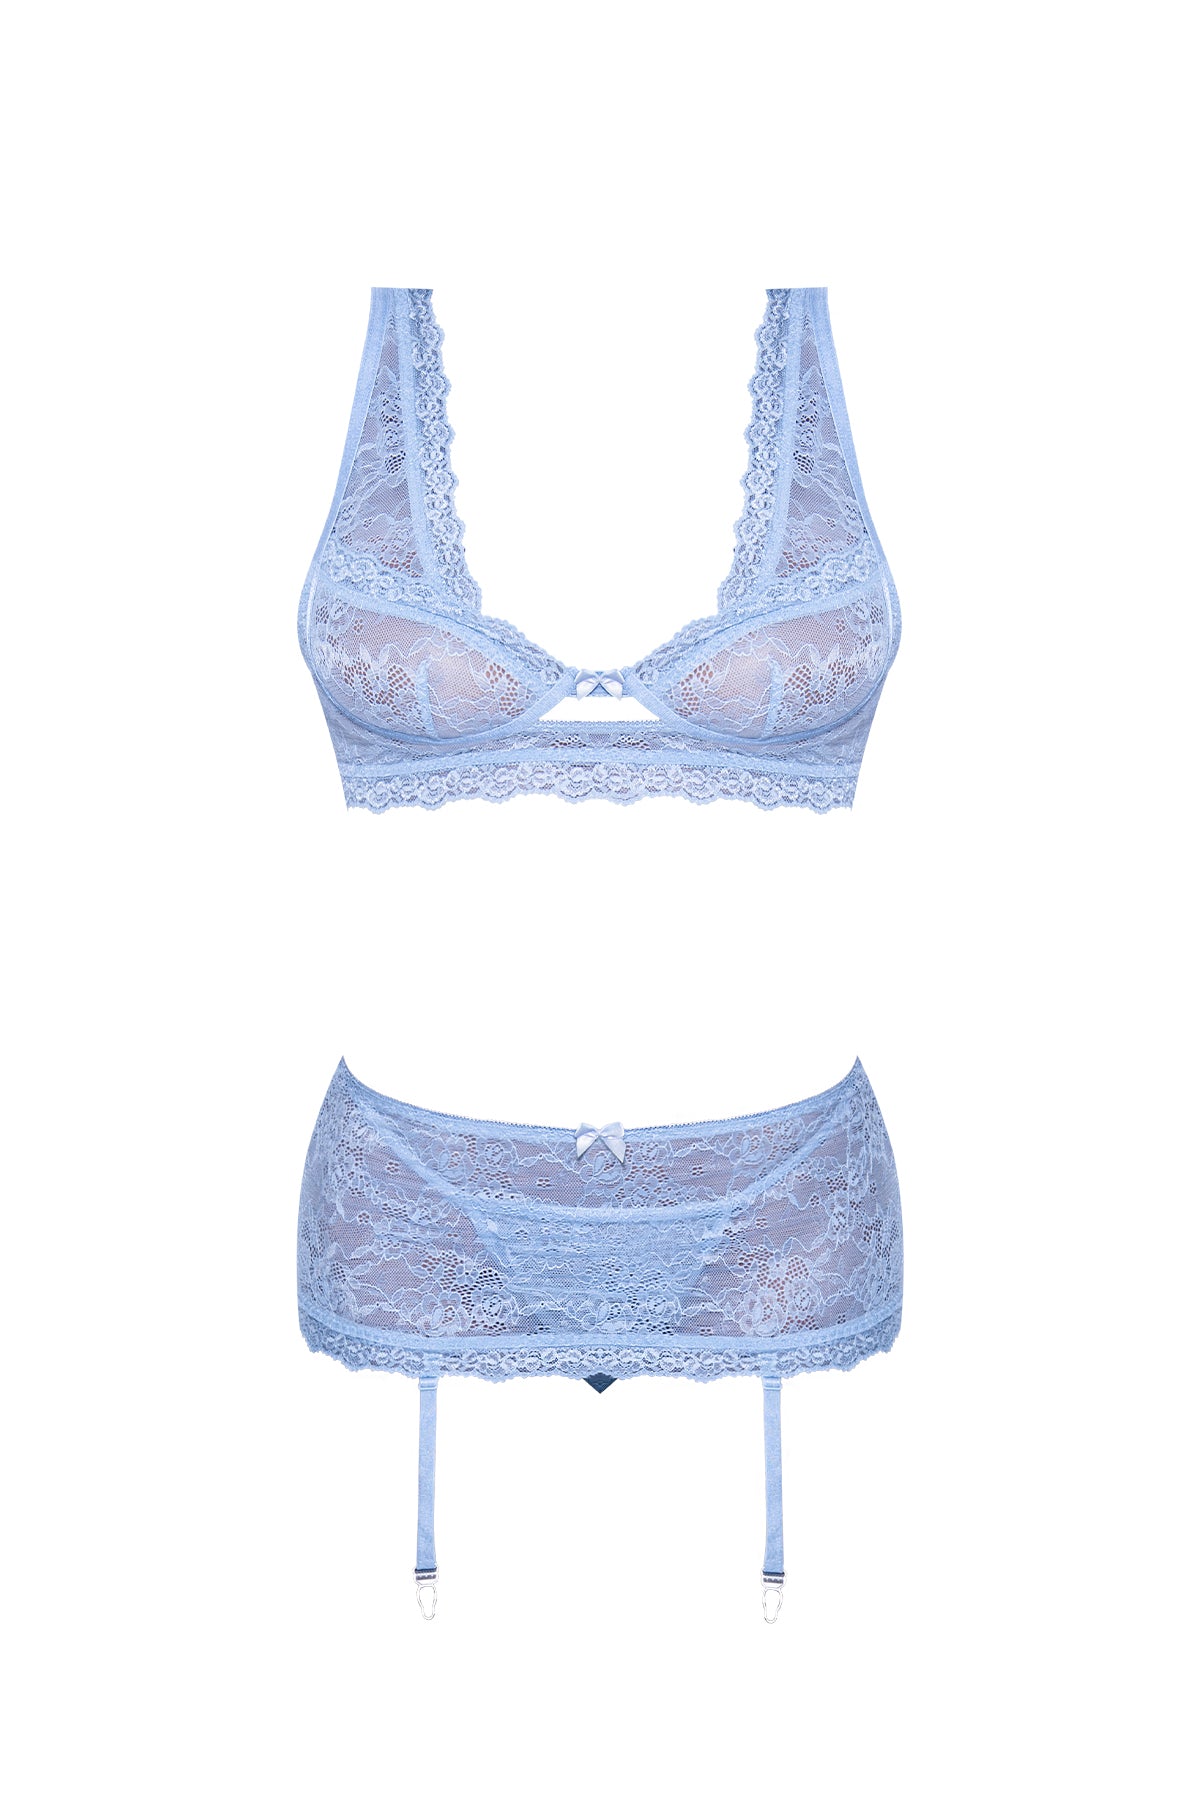 Loving & Pretty Silky lingerie set in sky blue